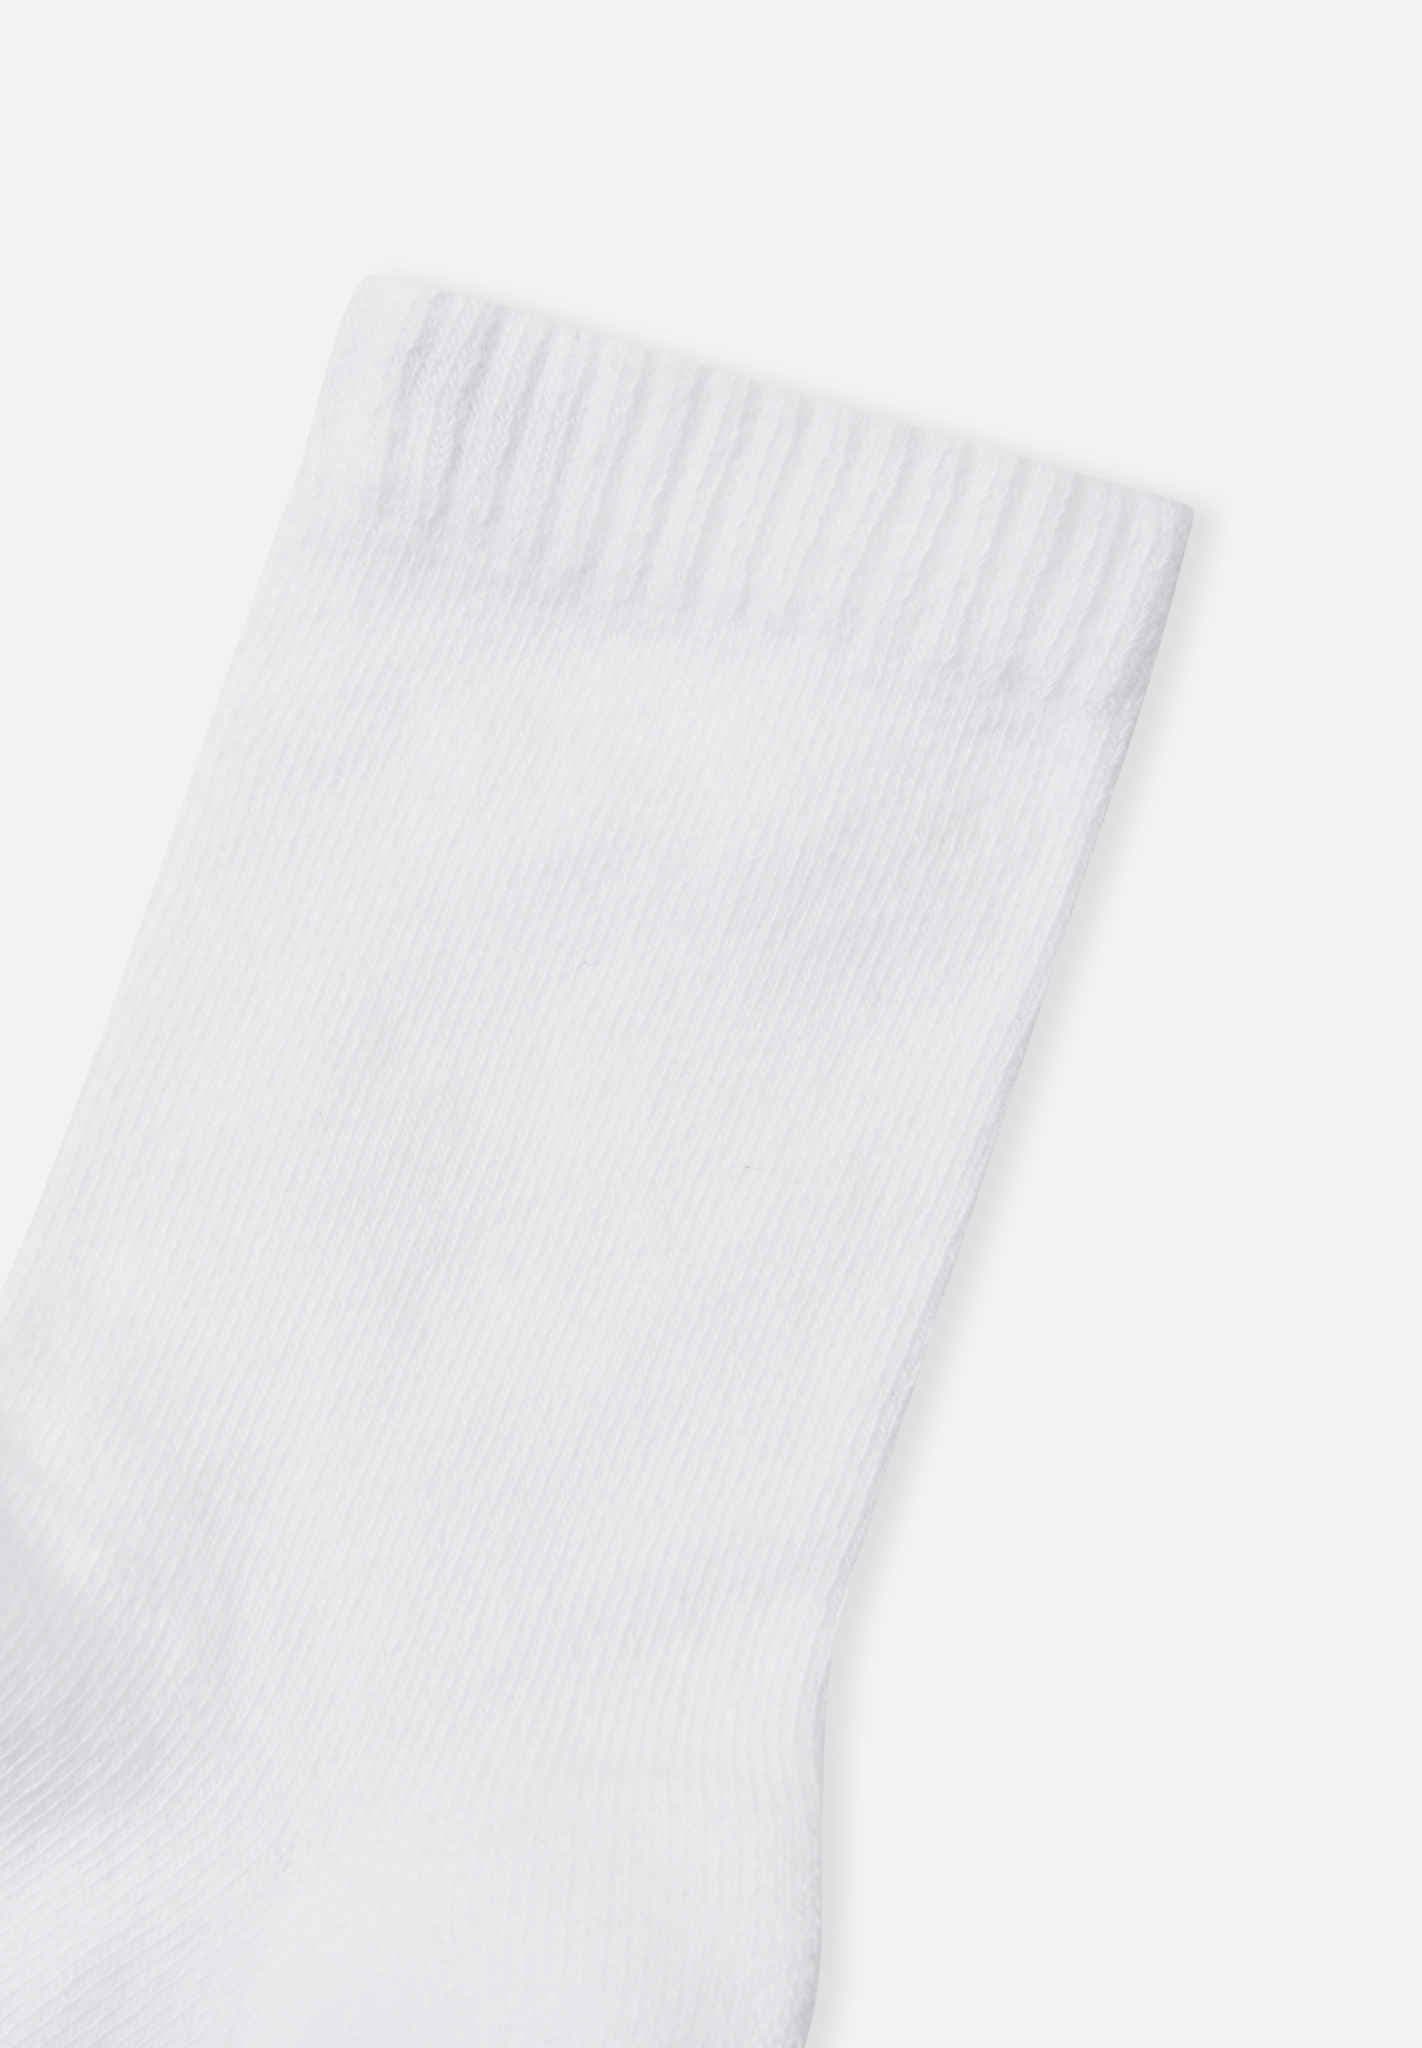 Anti-Bite Insect socks